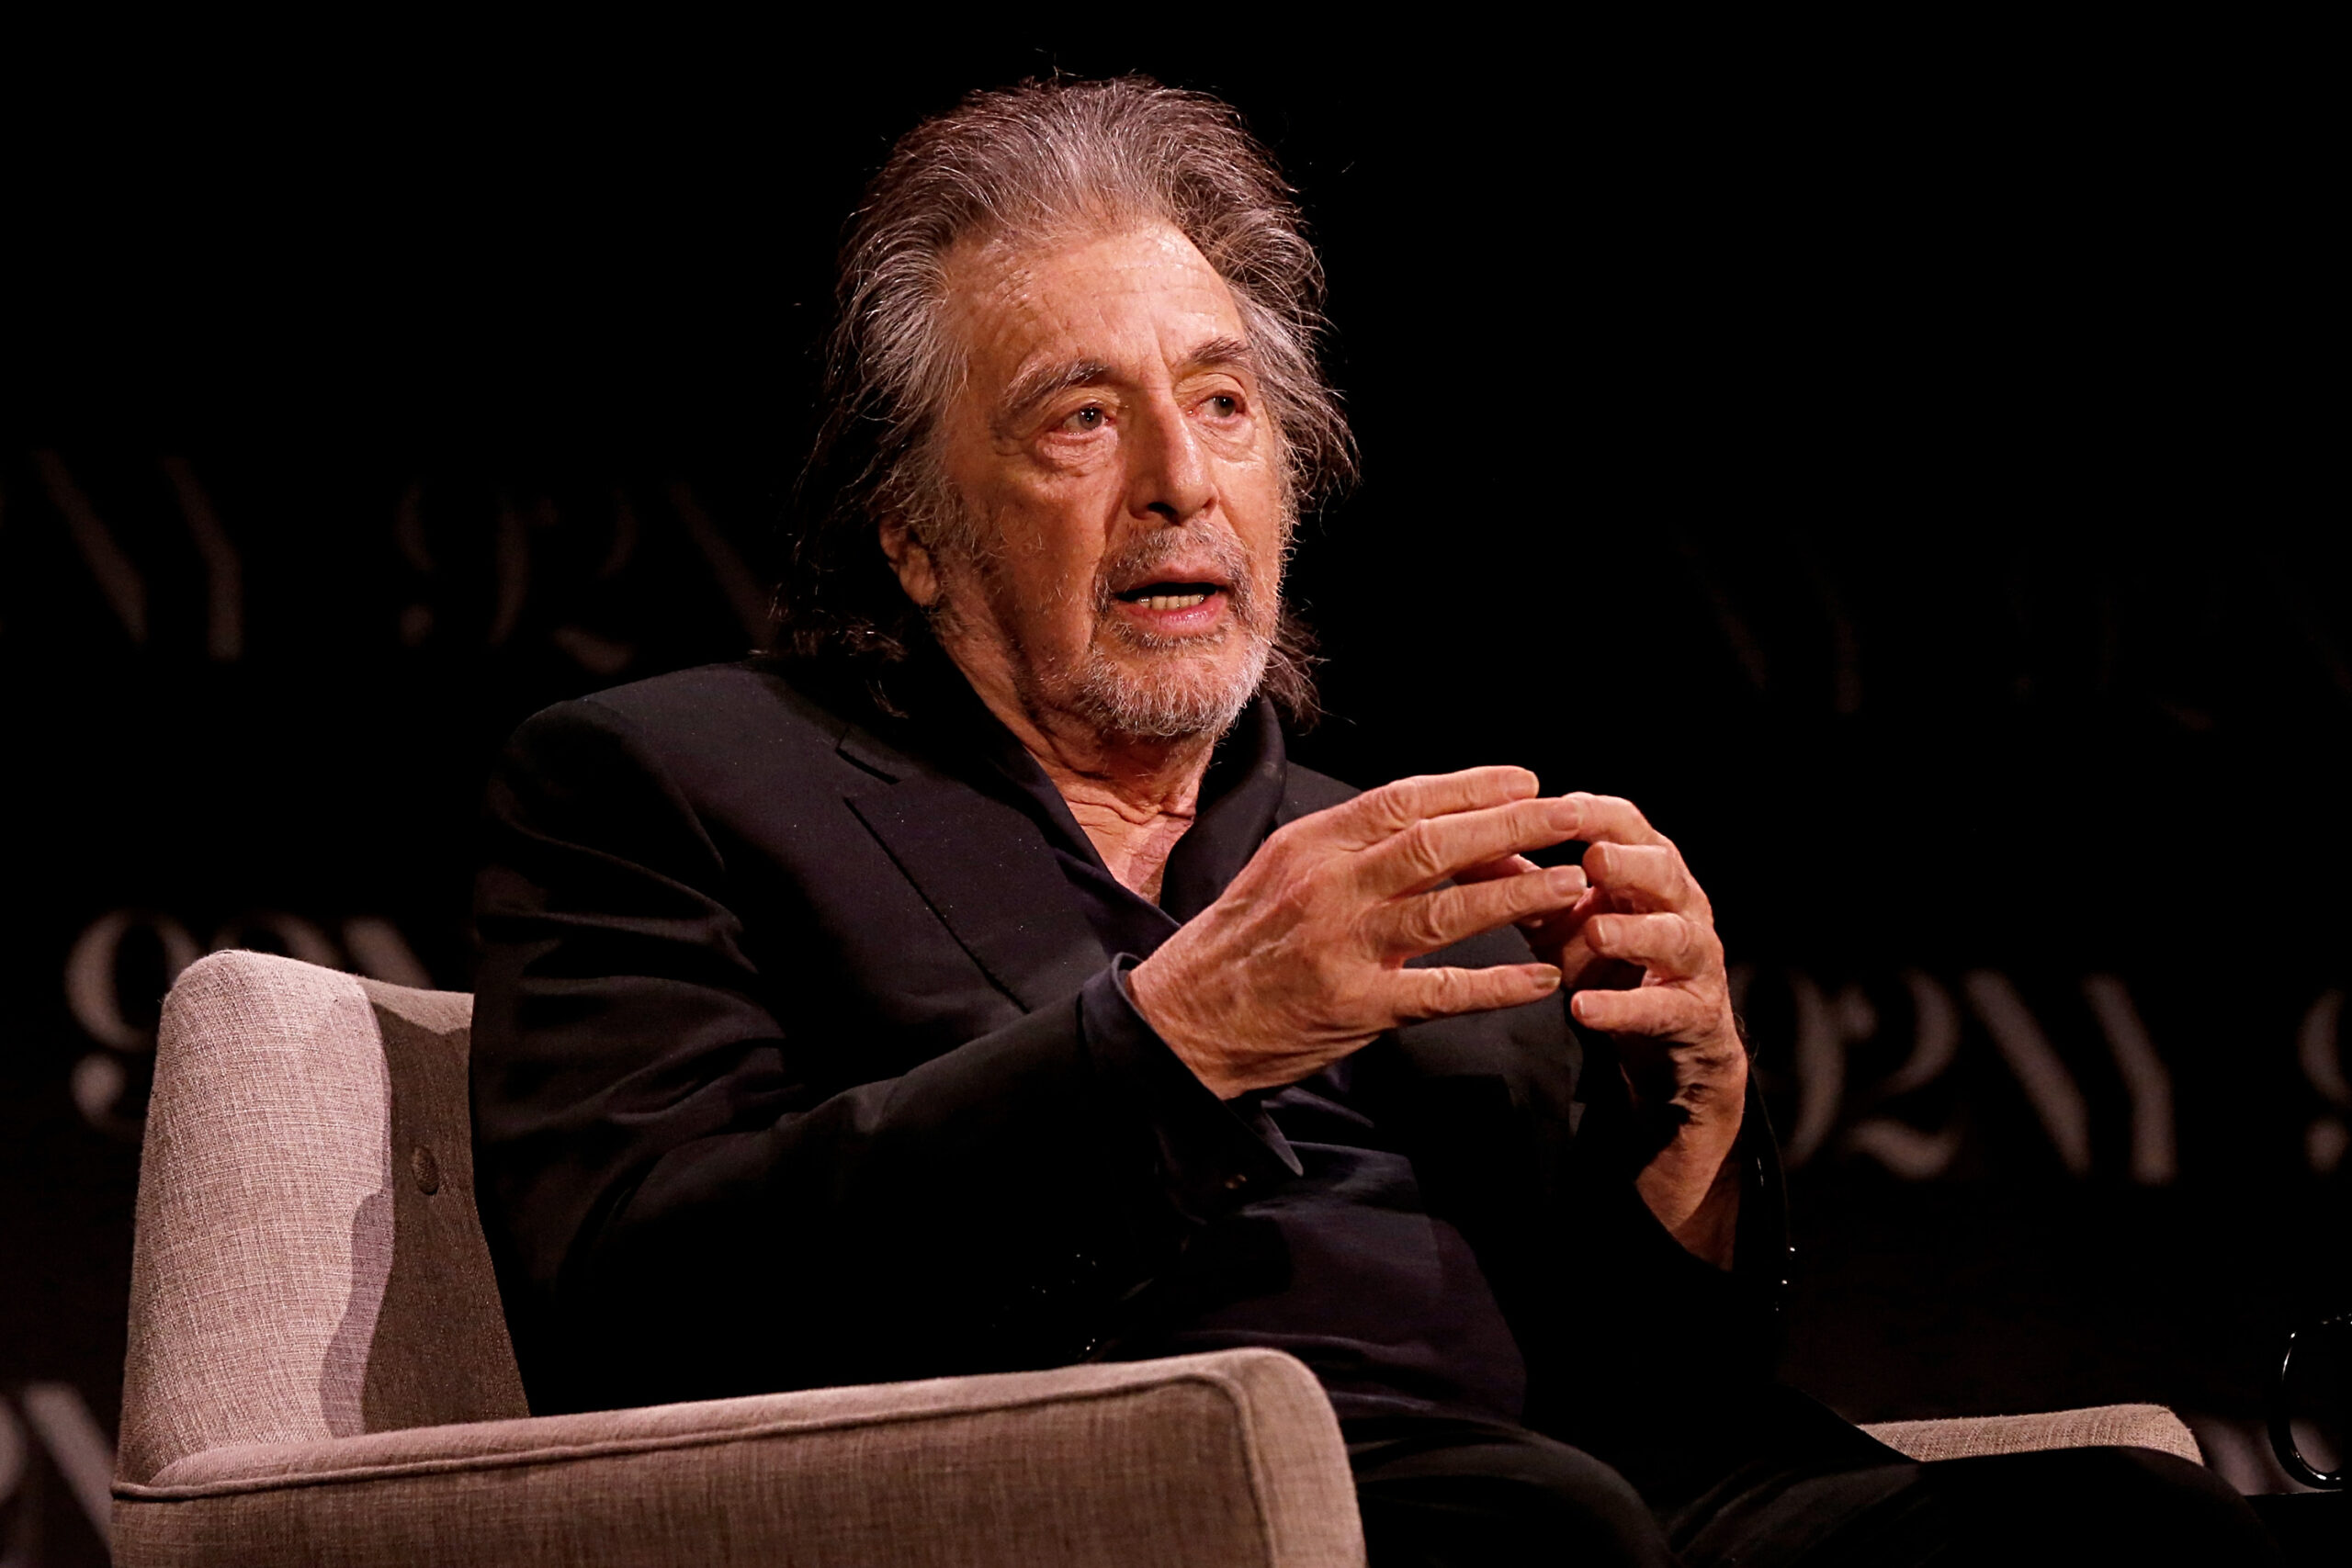 Al Pacino In Conversation With David Rubenstein